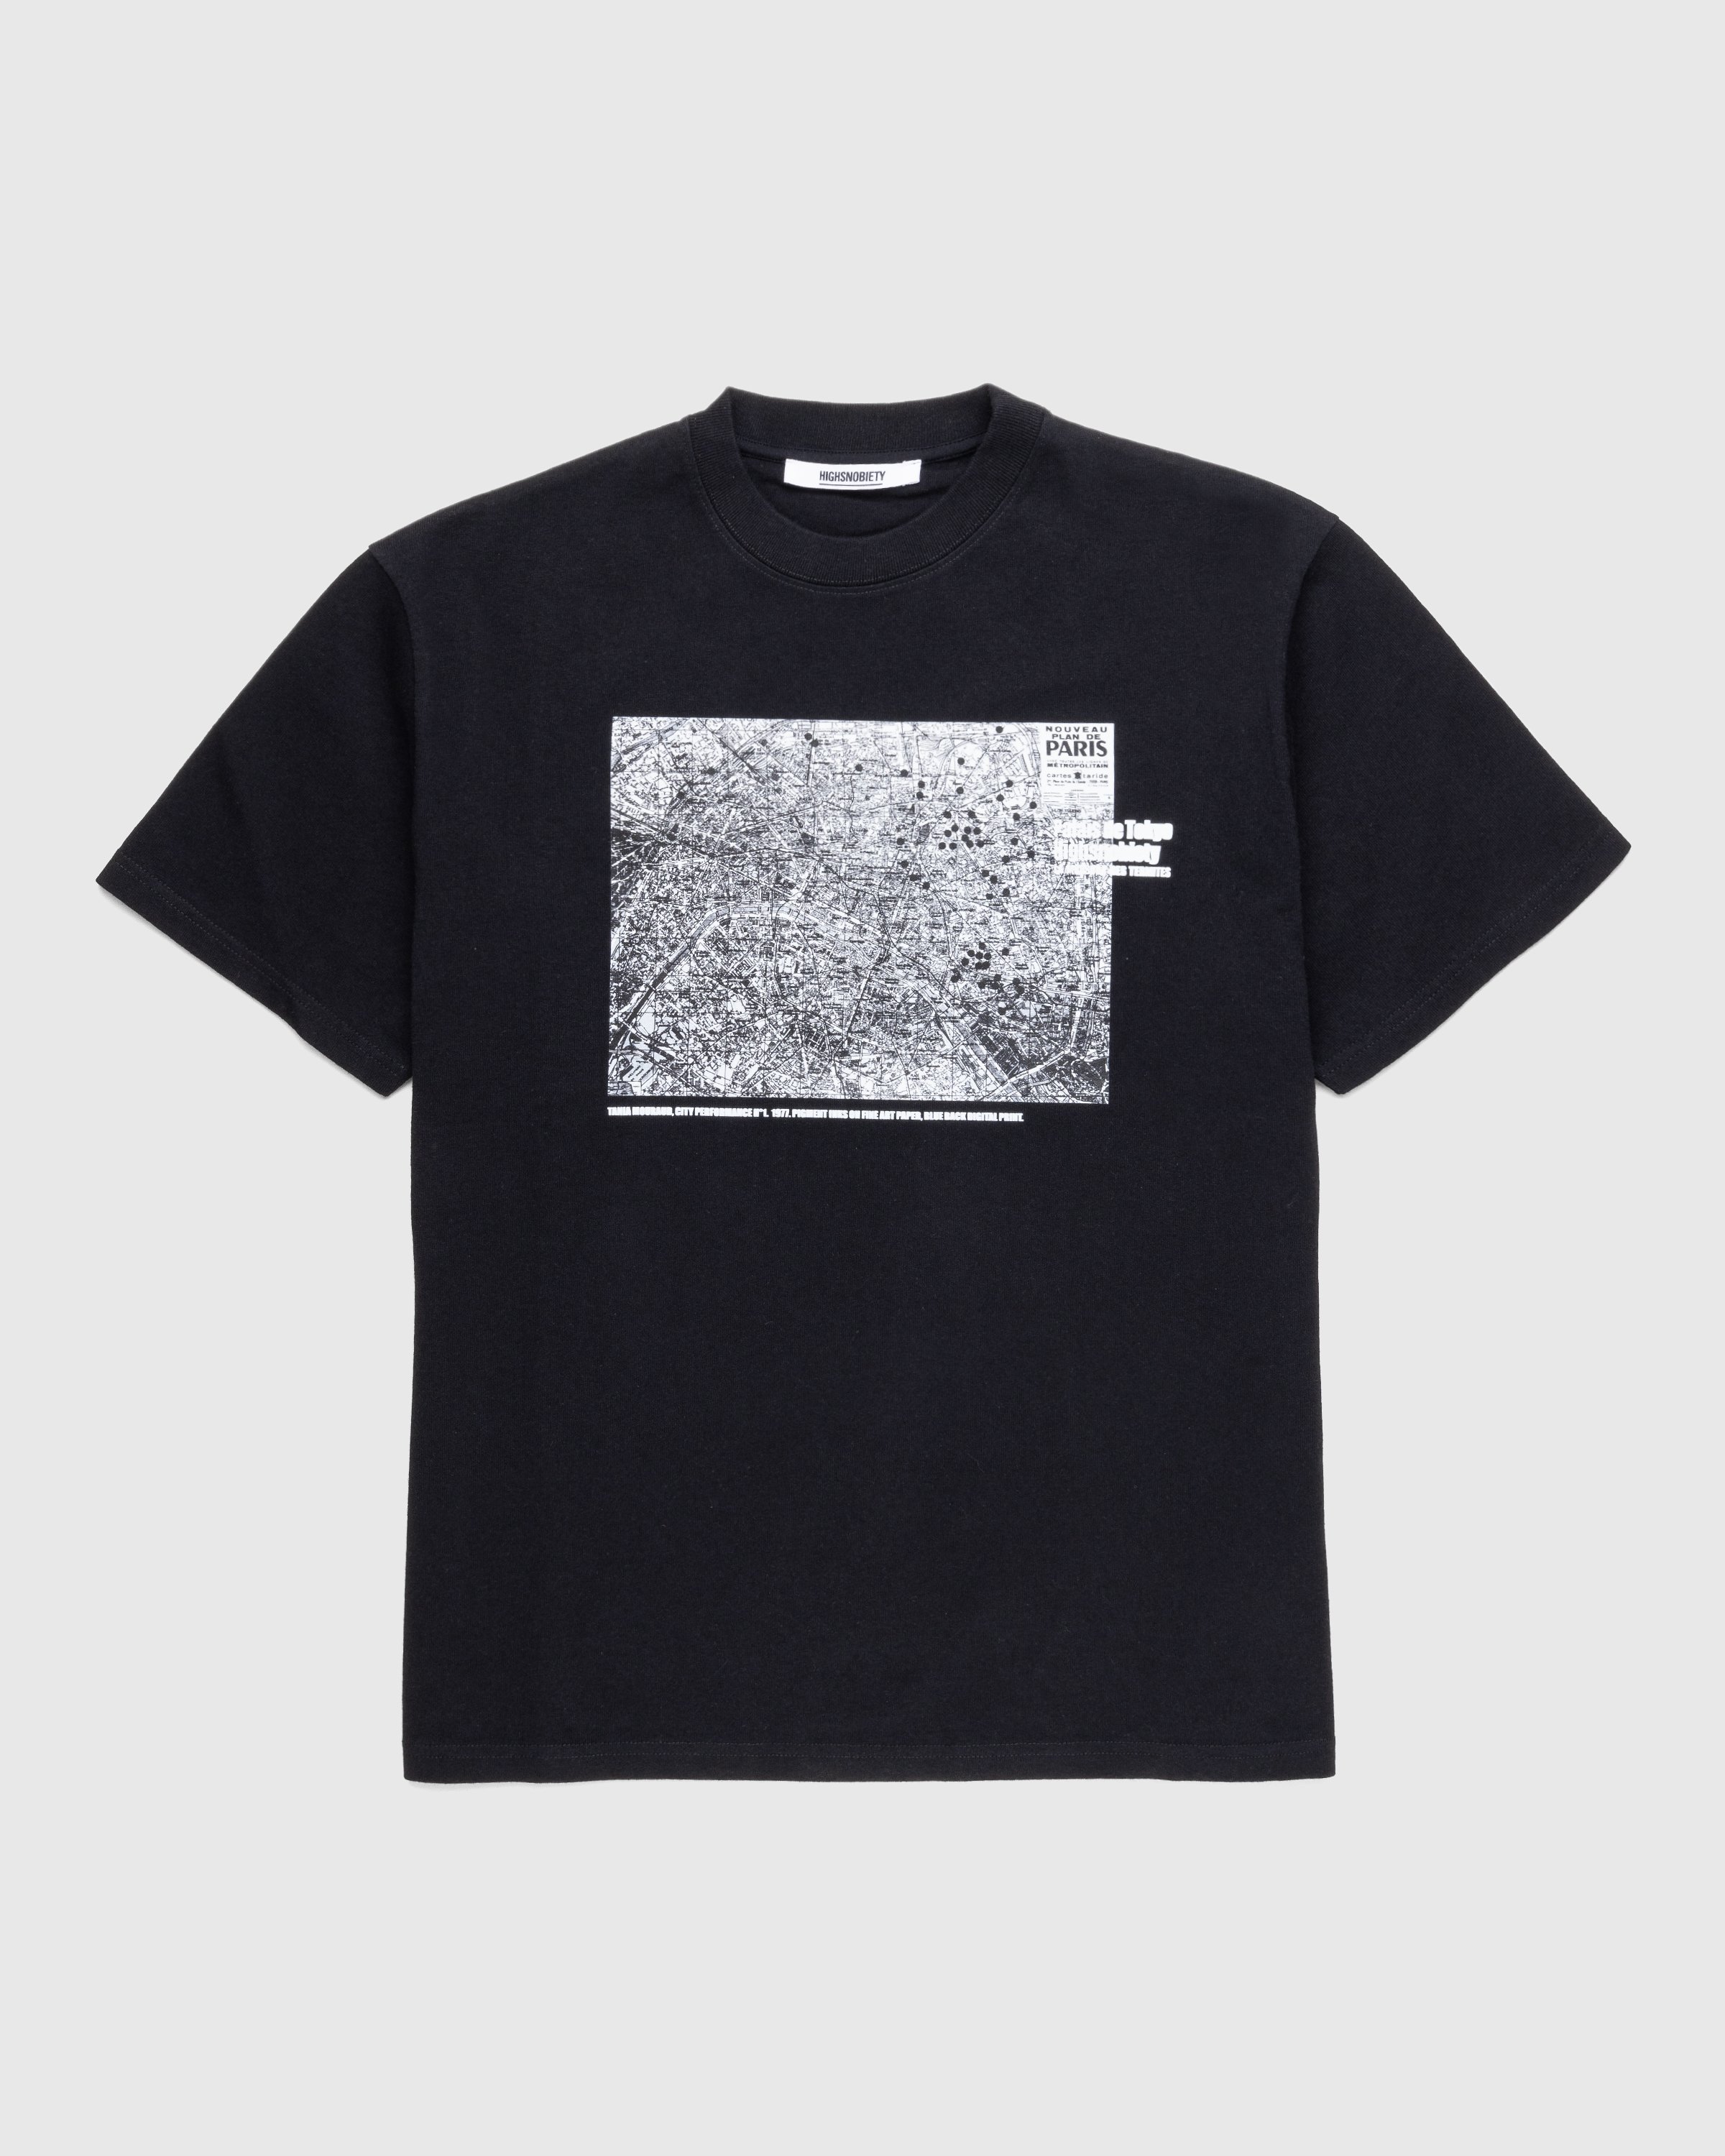 Palais de Tokyo x Highsnobiety - Tania Mouraud T-Shirt Black - Clothing - Black - Image 1